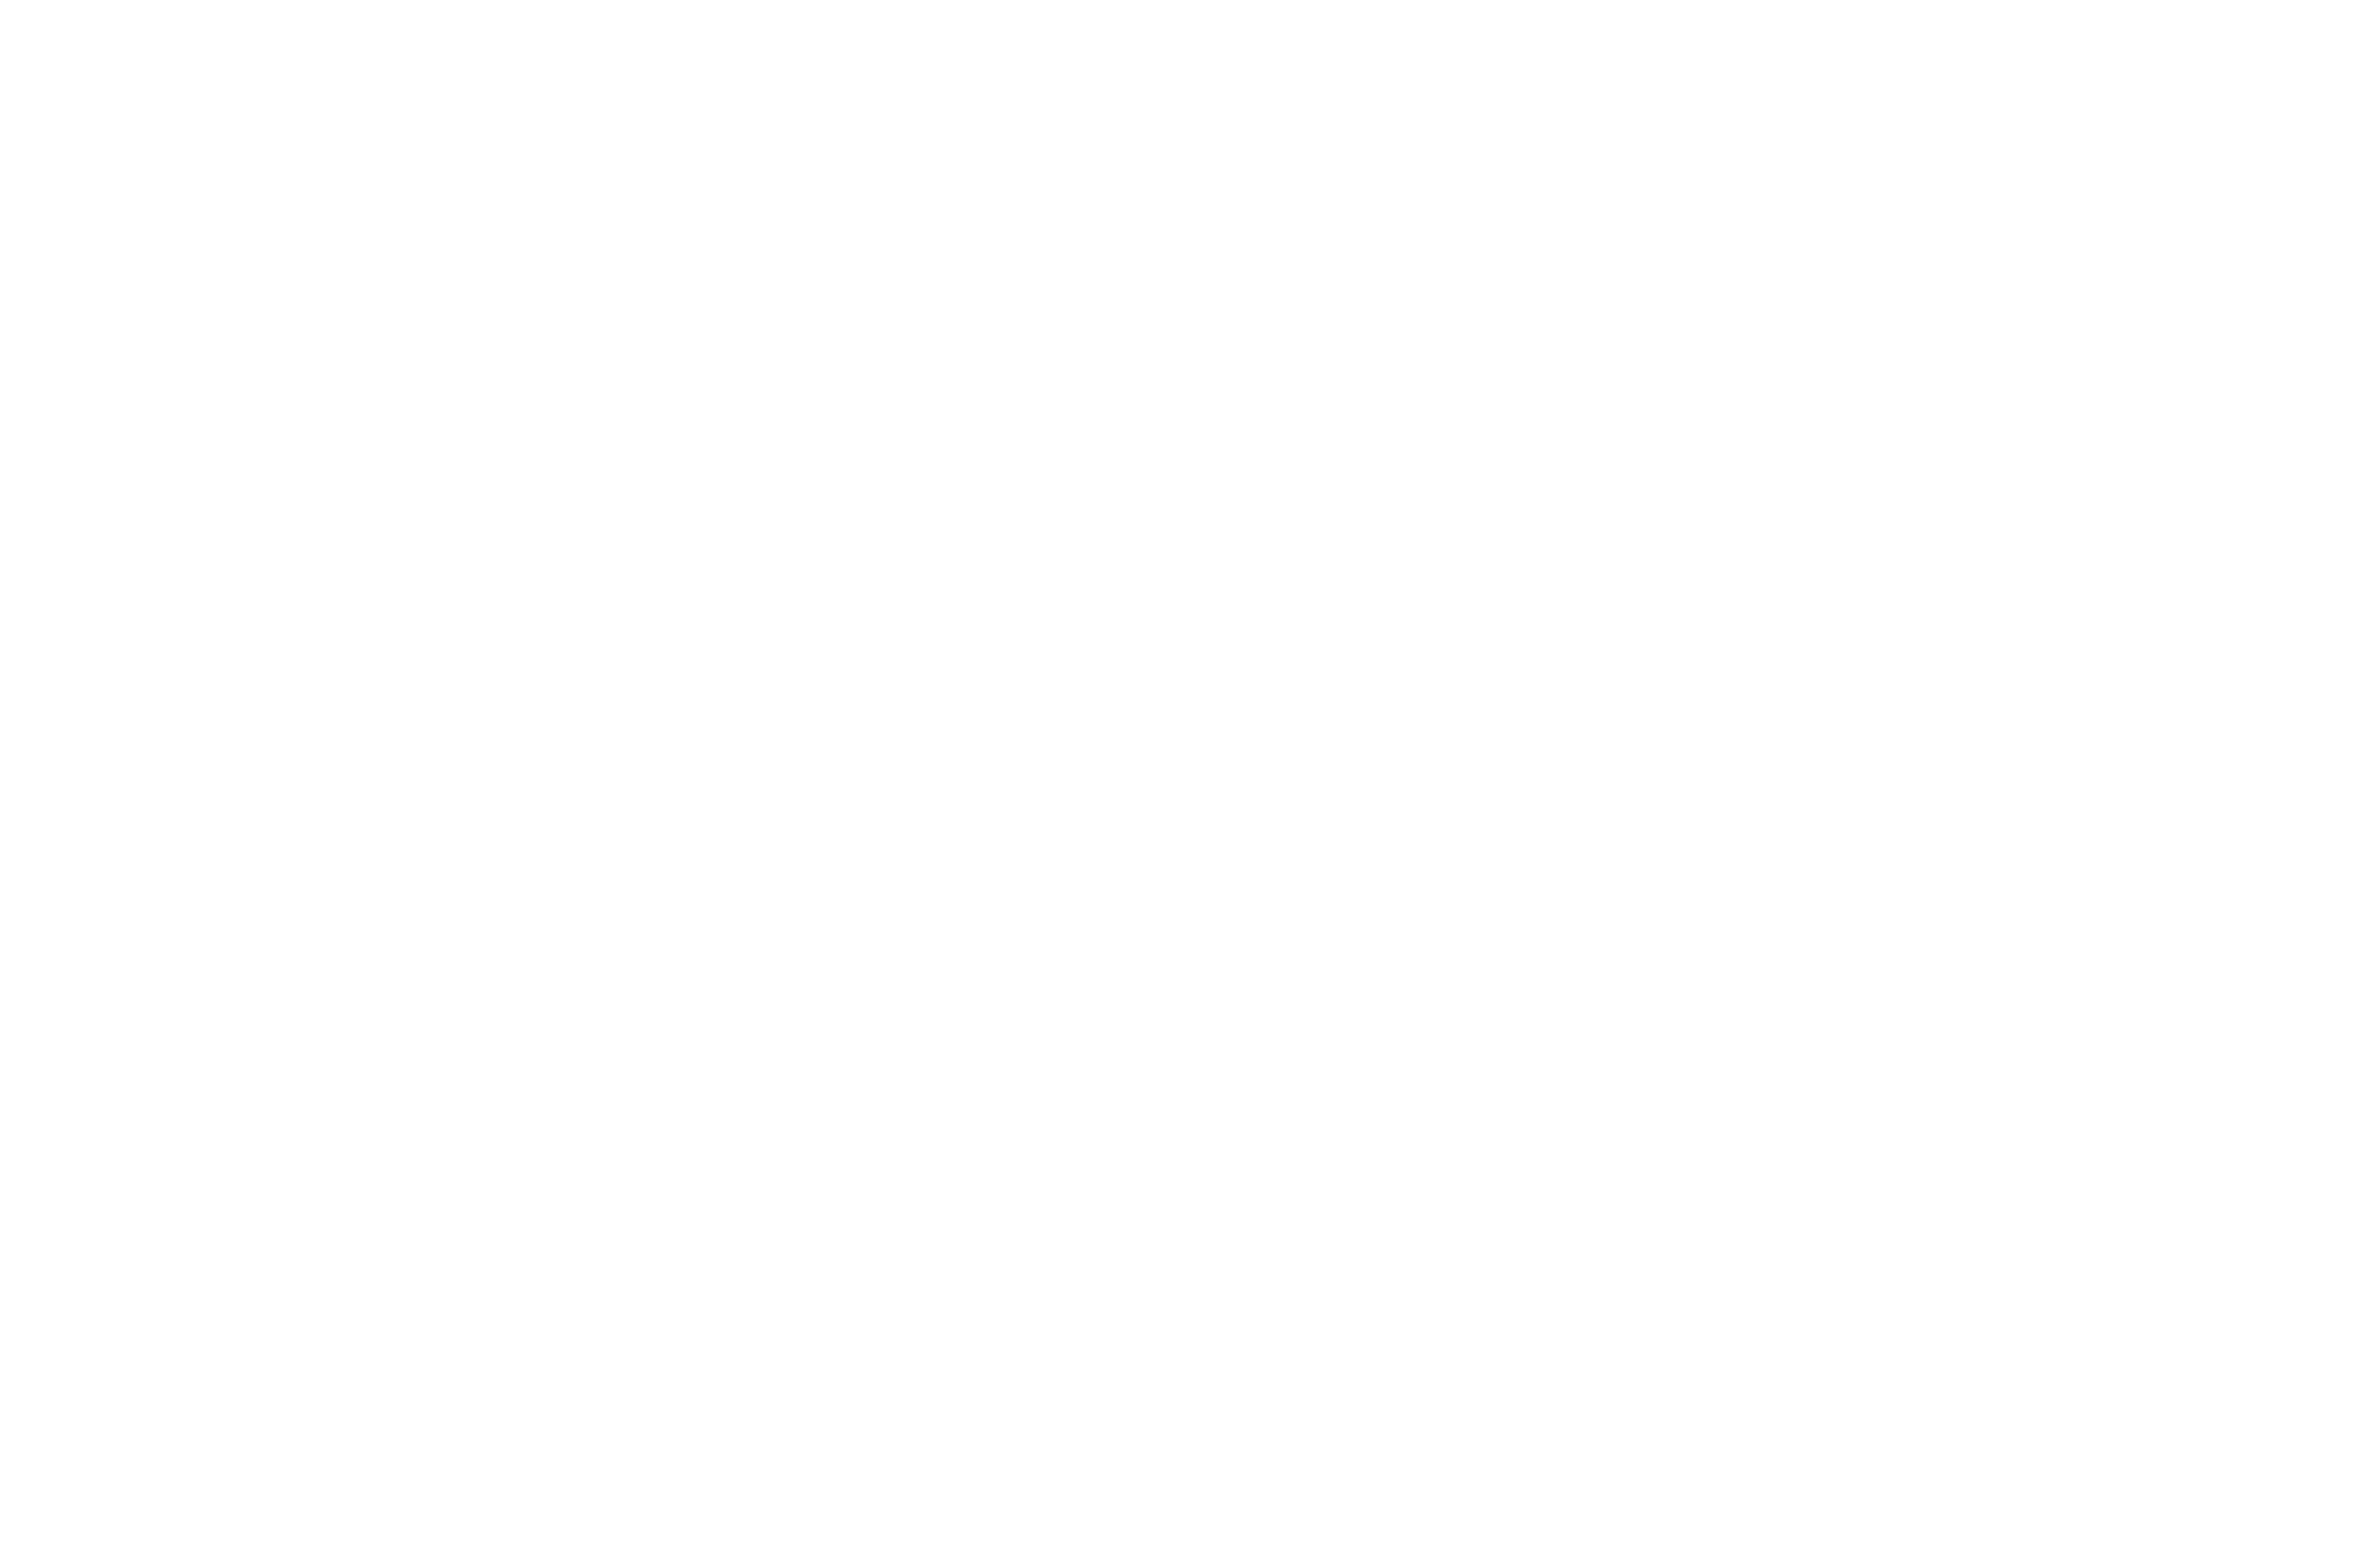 bitcoin mining logo